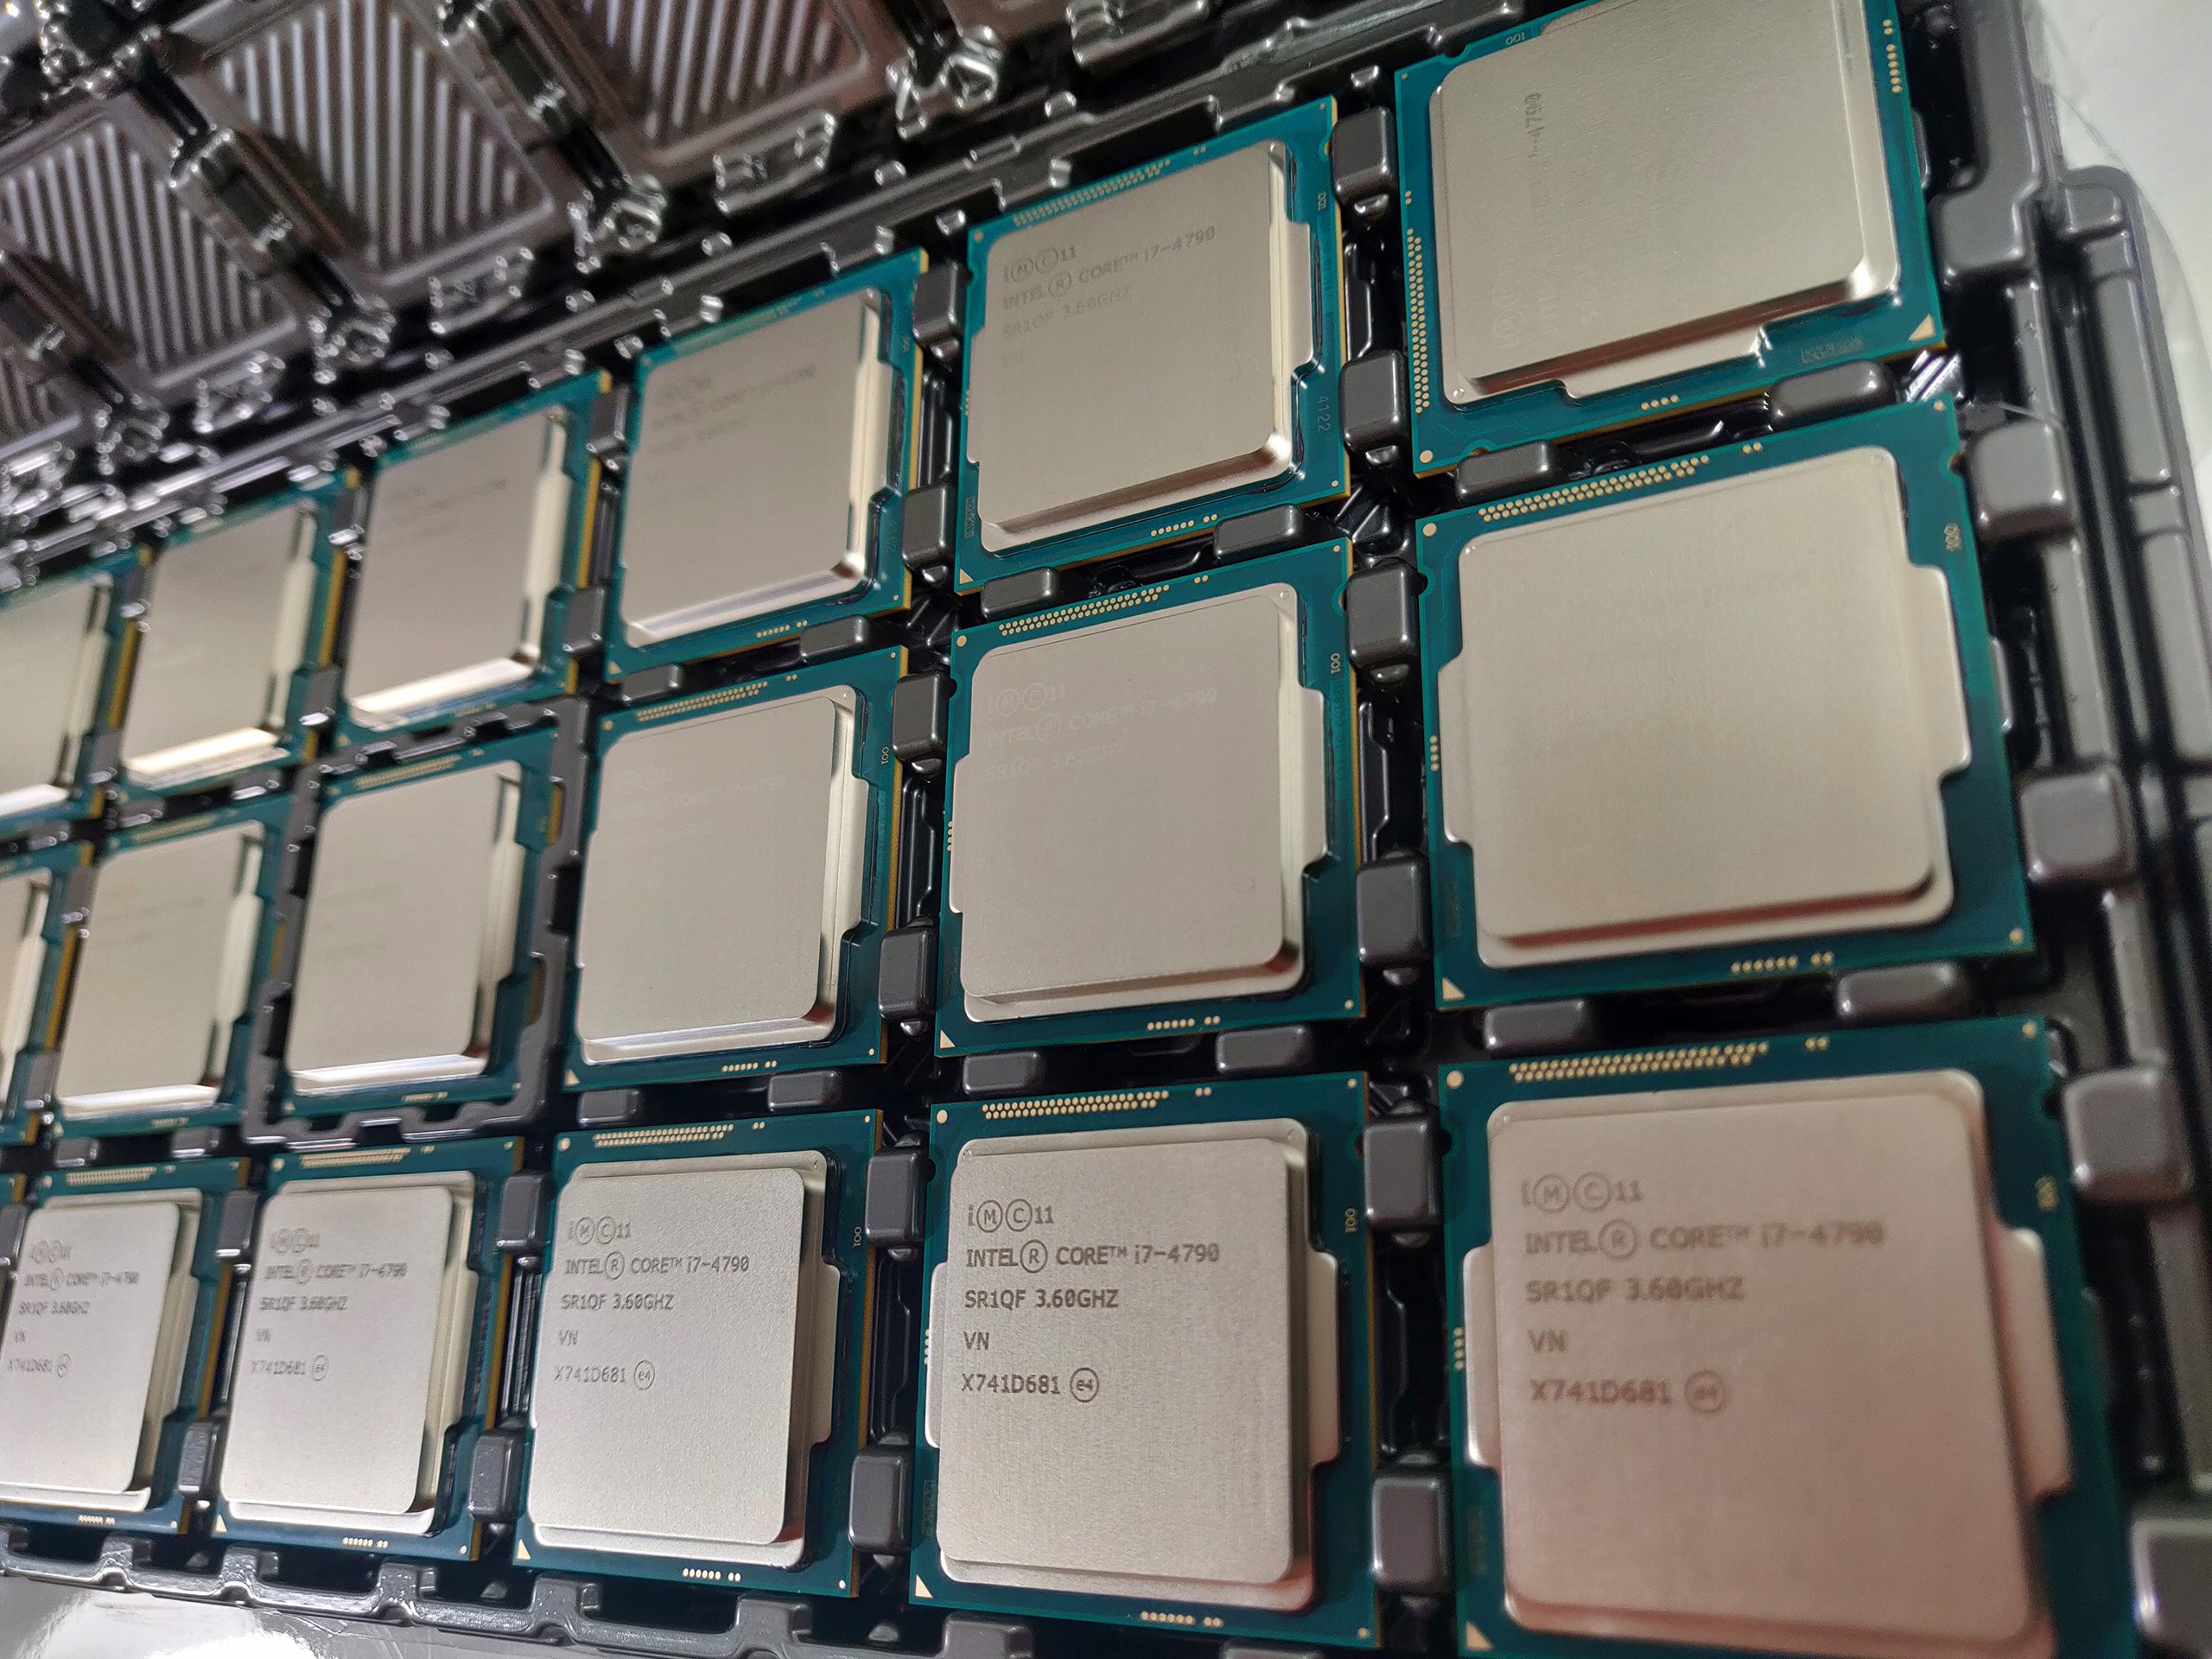 Procesor Intel Core i7-4790 + pasta Arctic MX-4 Kod producenta i74790